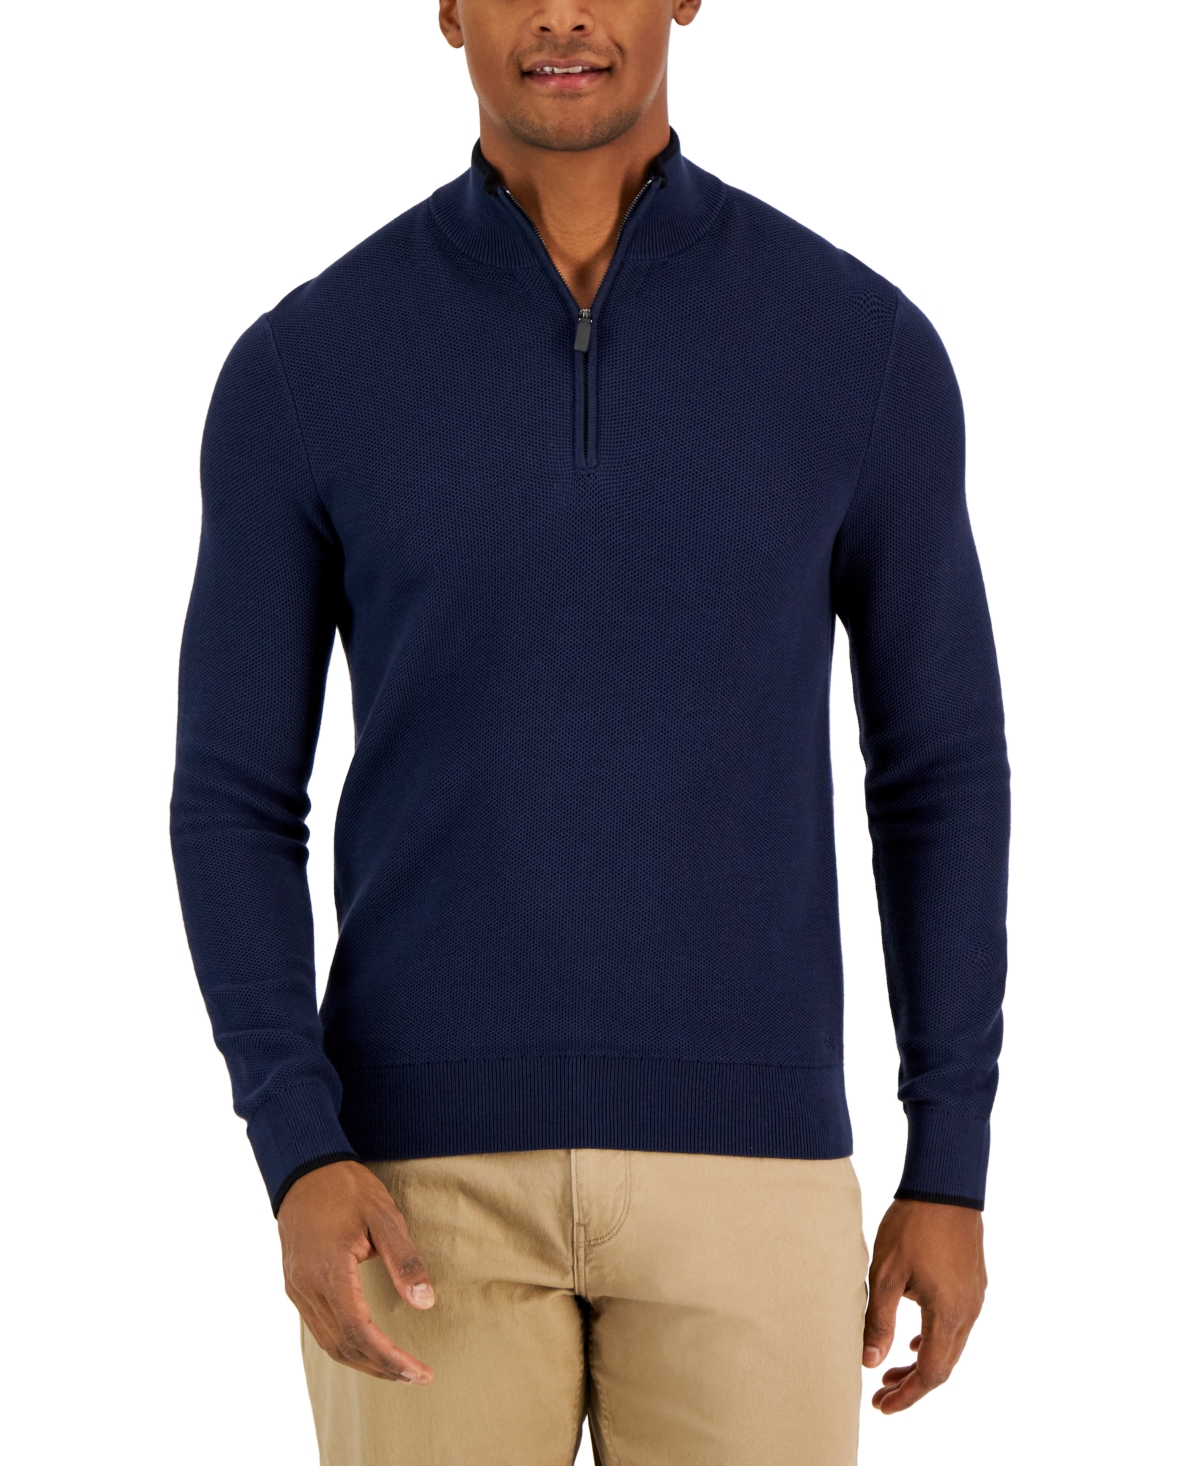 Men's Textured Quarter-Zip Sweater, Created for Macy's - Midnight